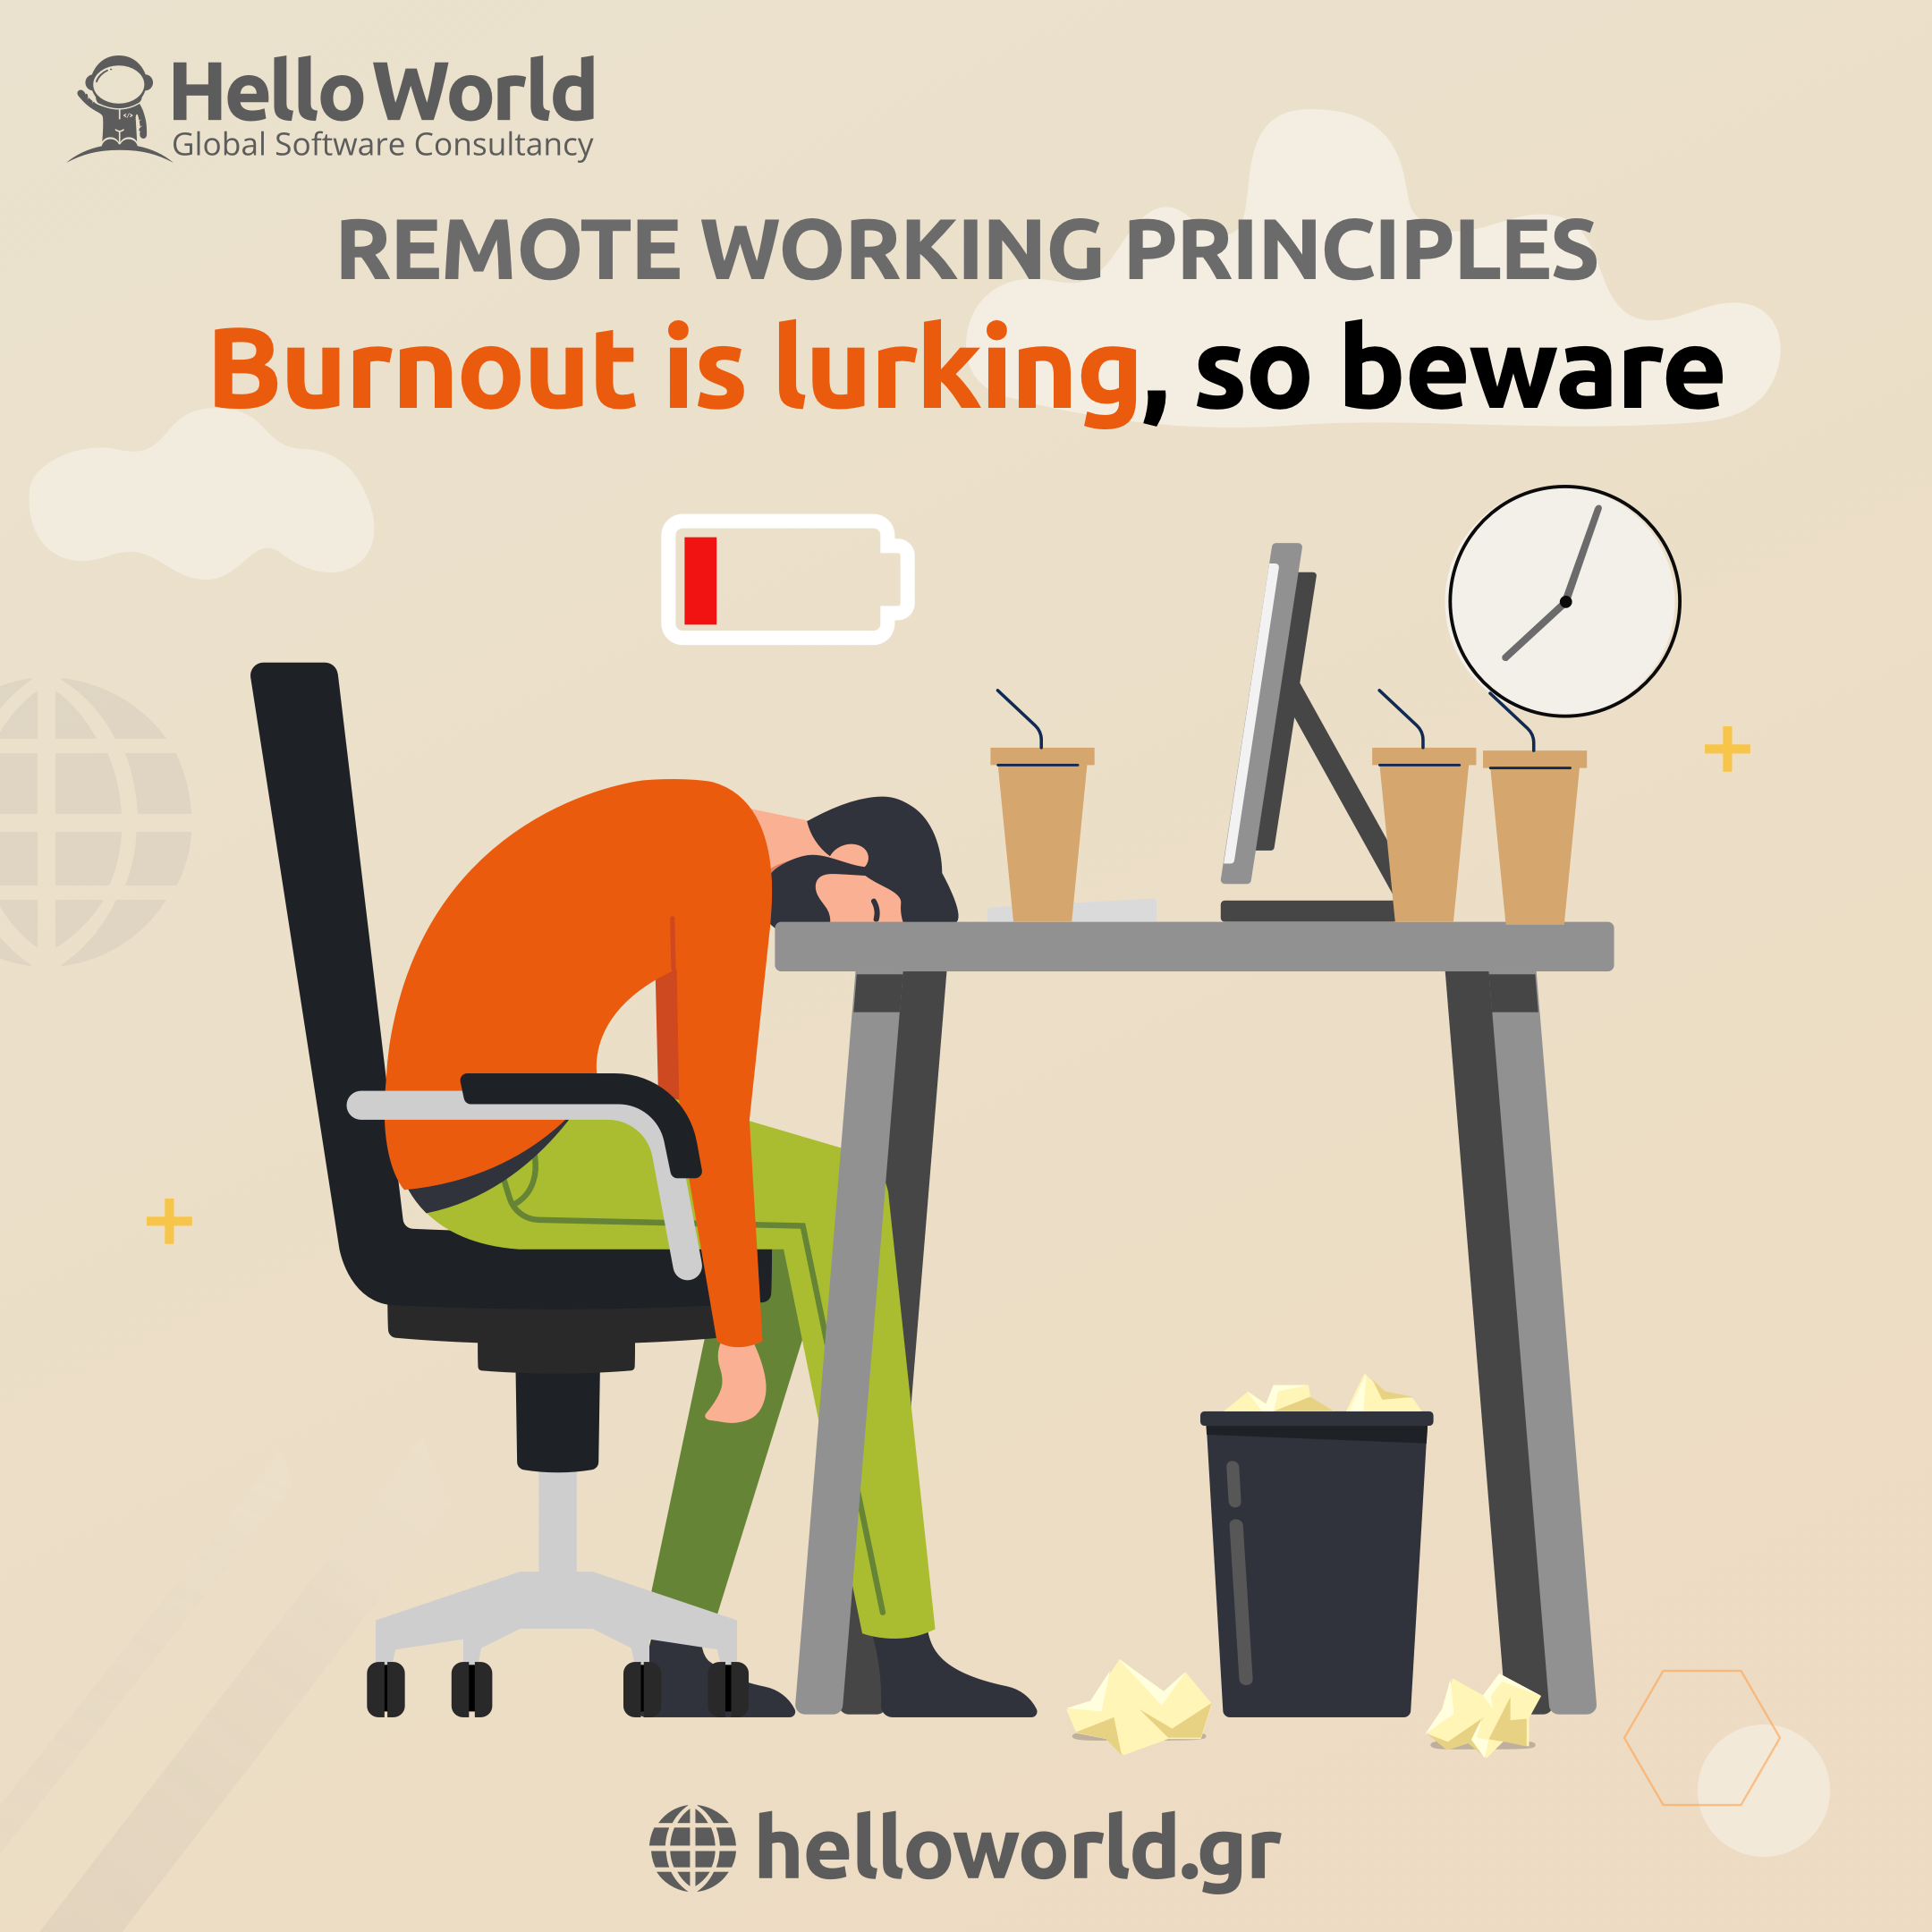 Burnout is lurking, so beware